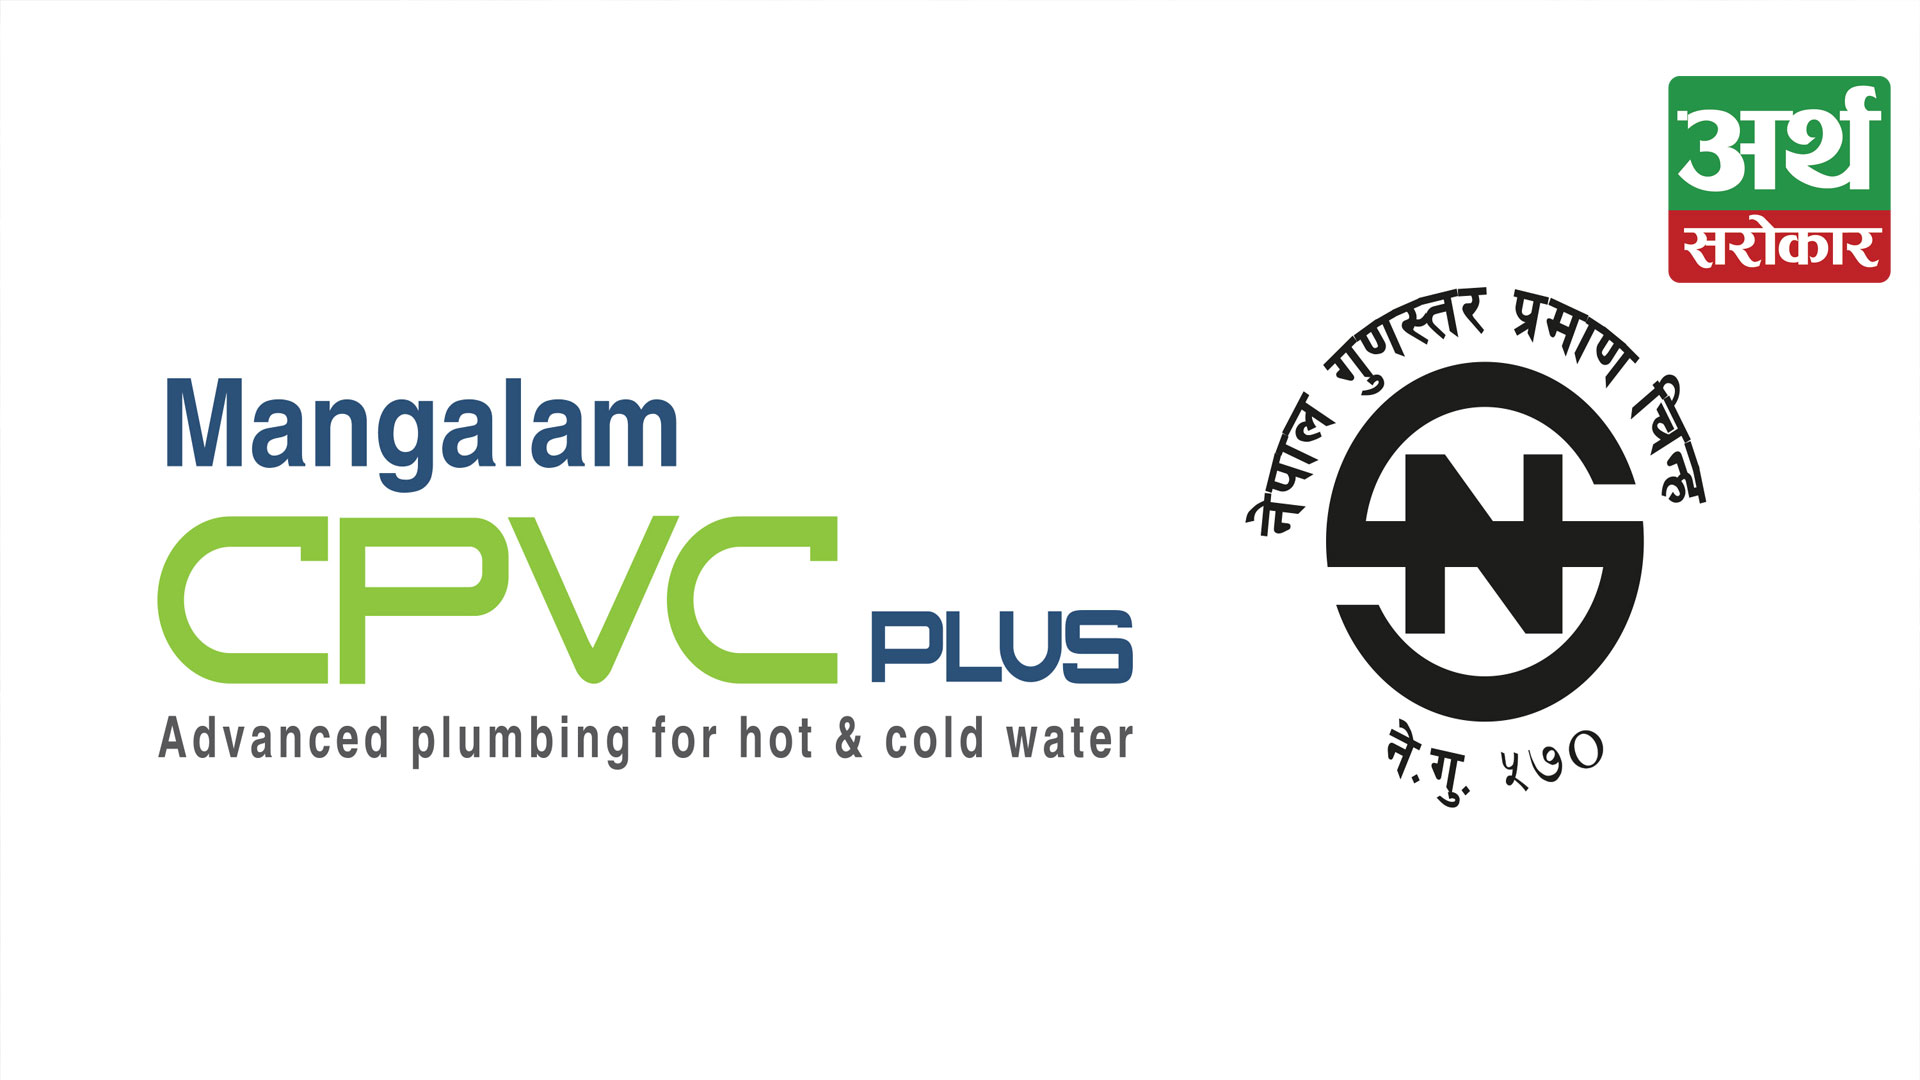 Mangalam’s CPVC Plus Gets NS Certification